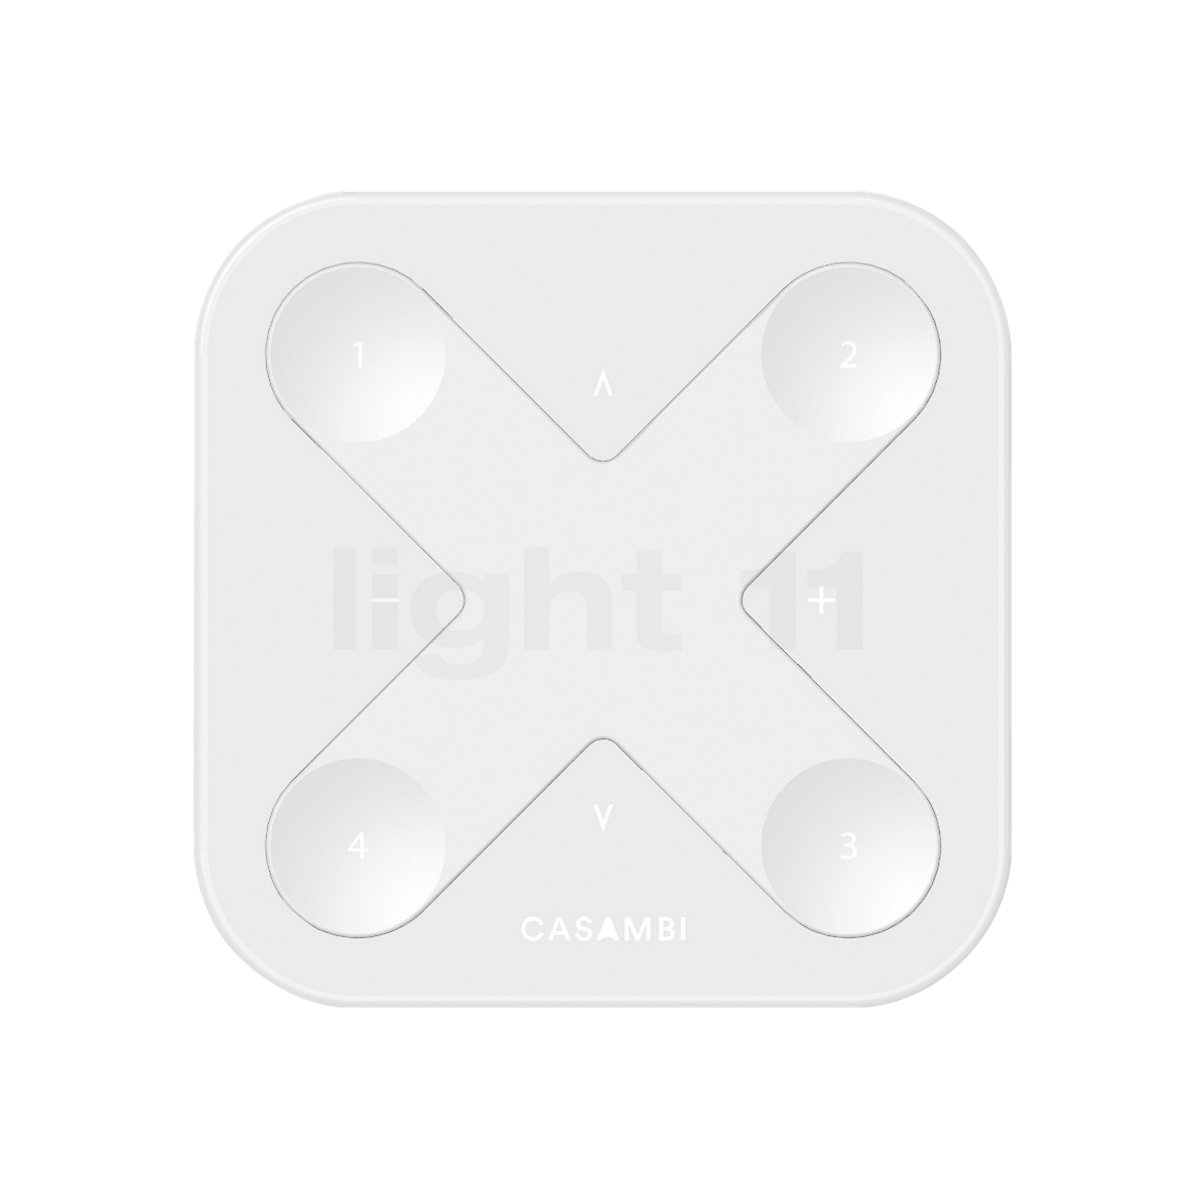 Oligo Casambi radio button for Pendant Light